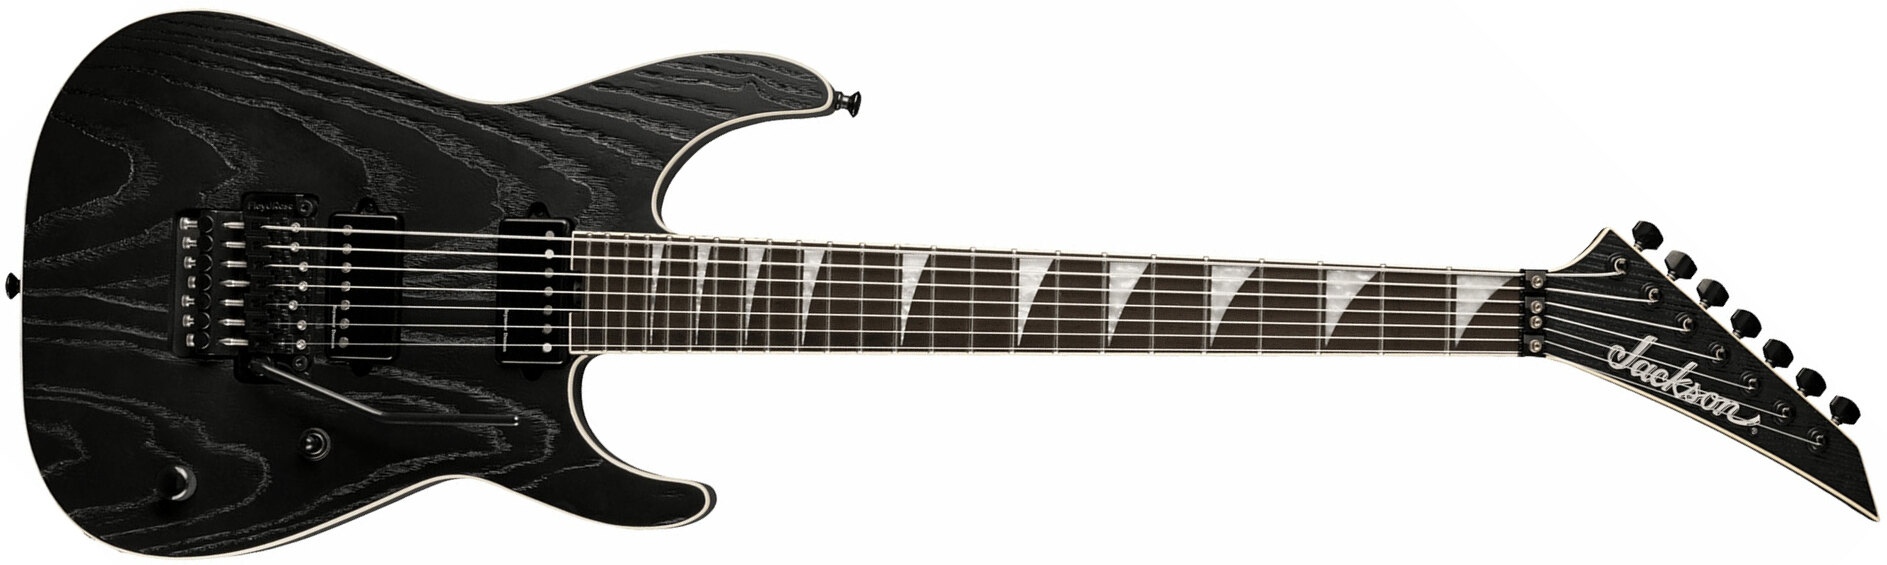 Jackson Jeff Loomis Soloist Sl7 Pro Signature 7c 2h Seymour Duncan Fr Eb - Satin Black - 7 string electric guitar - Main picture